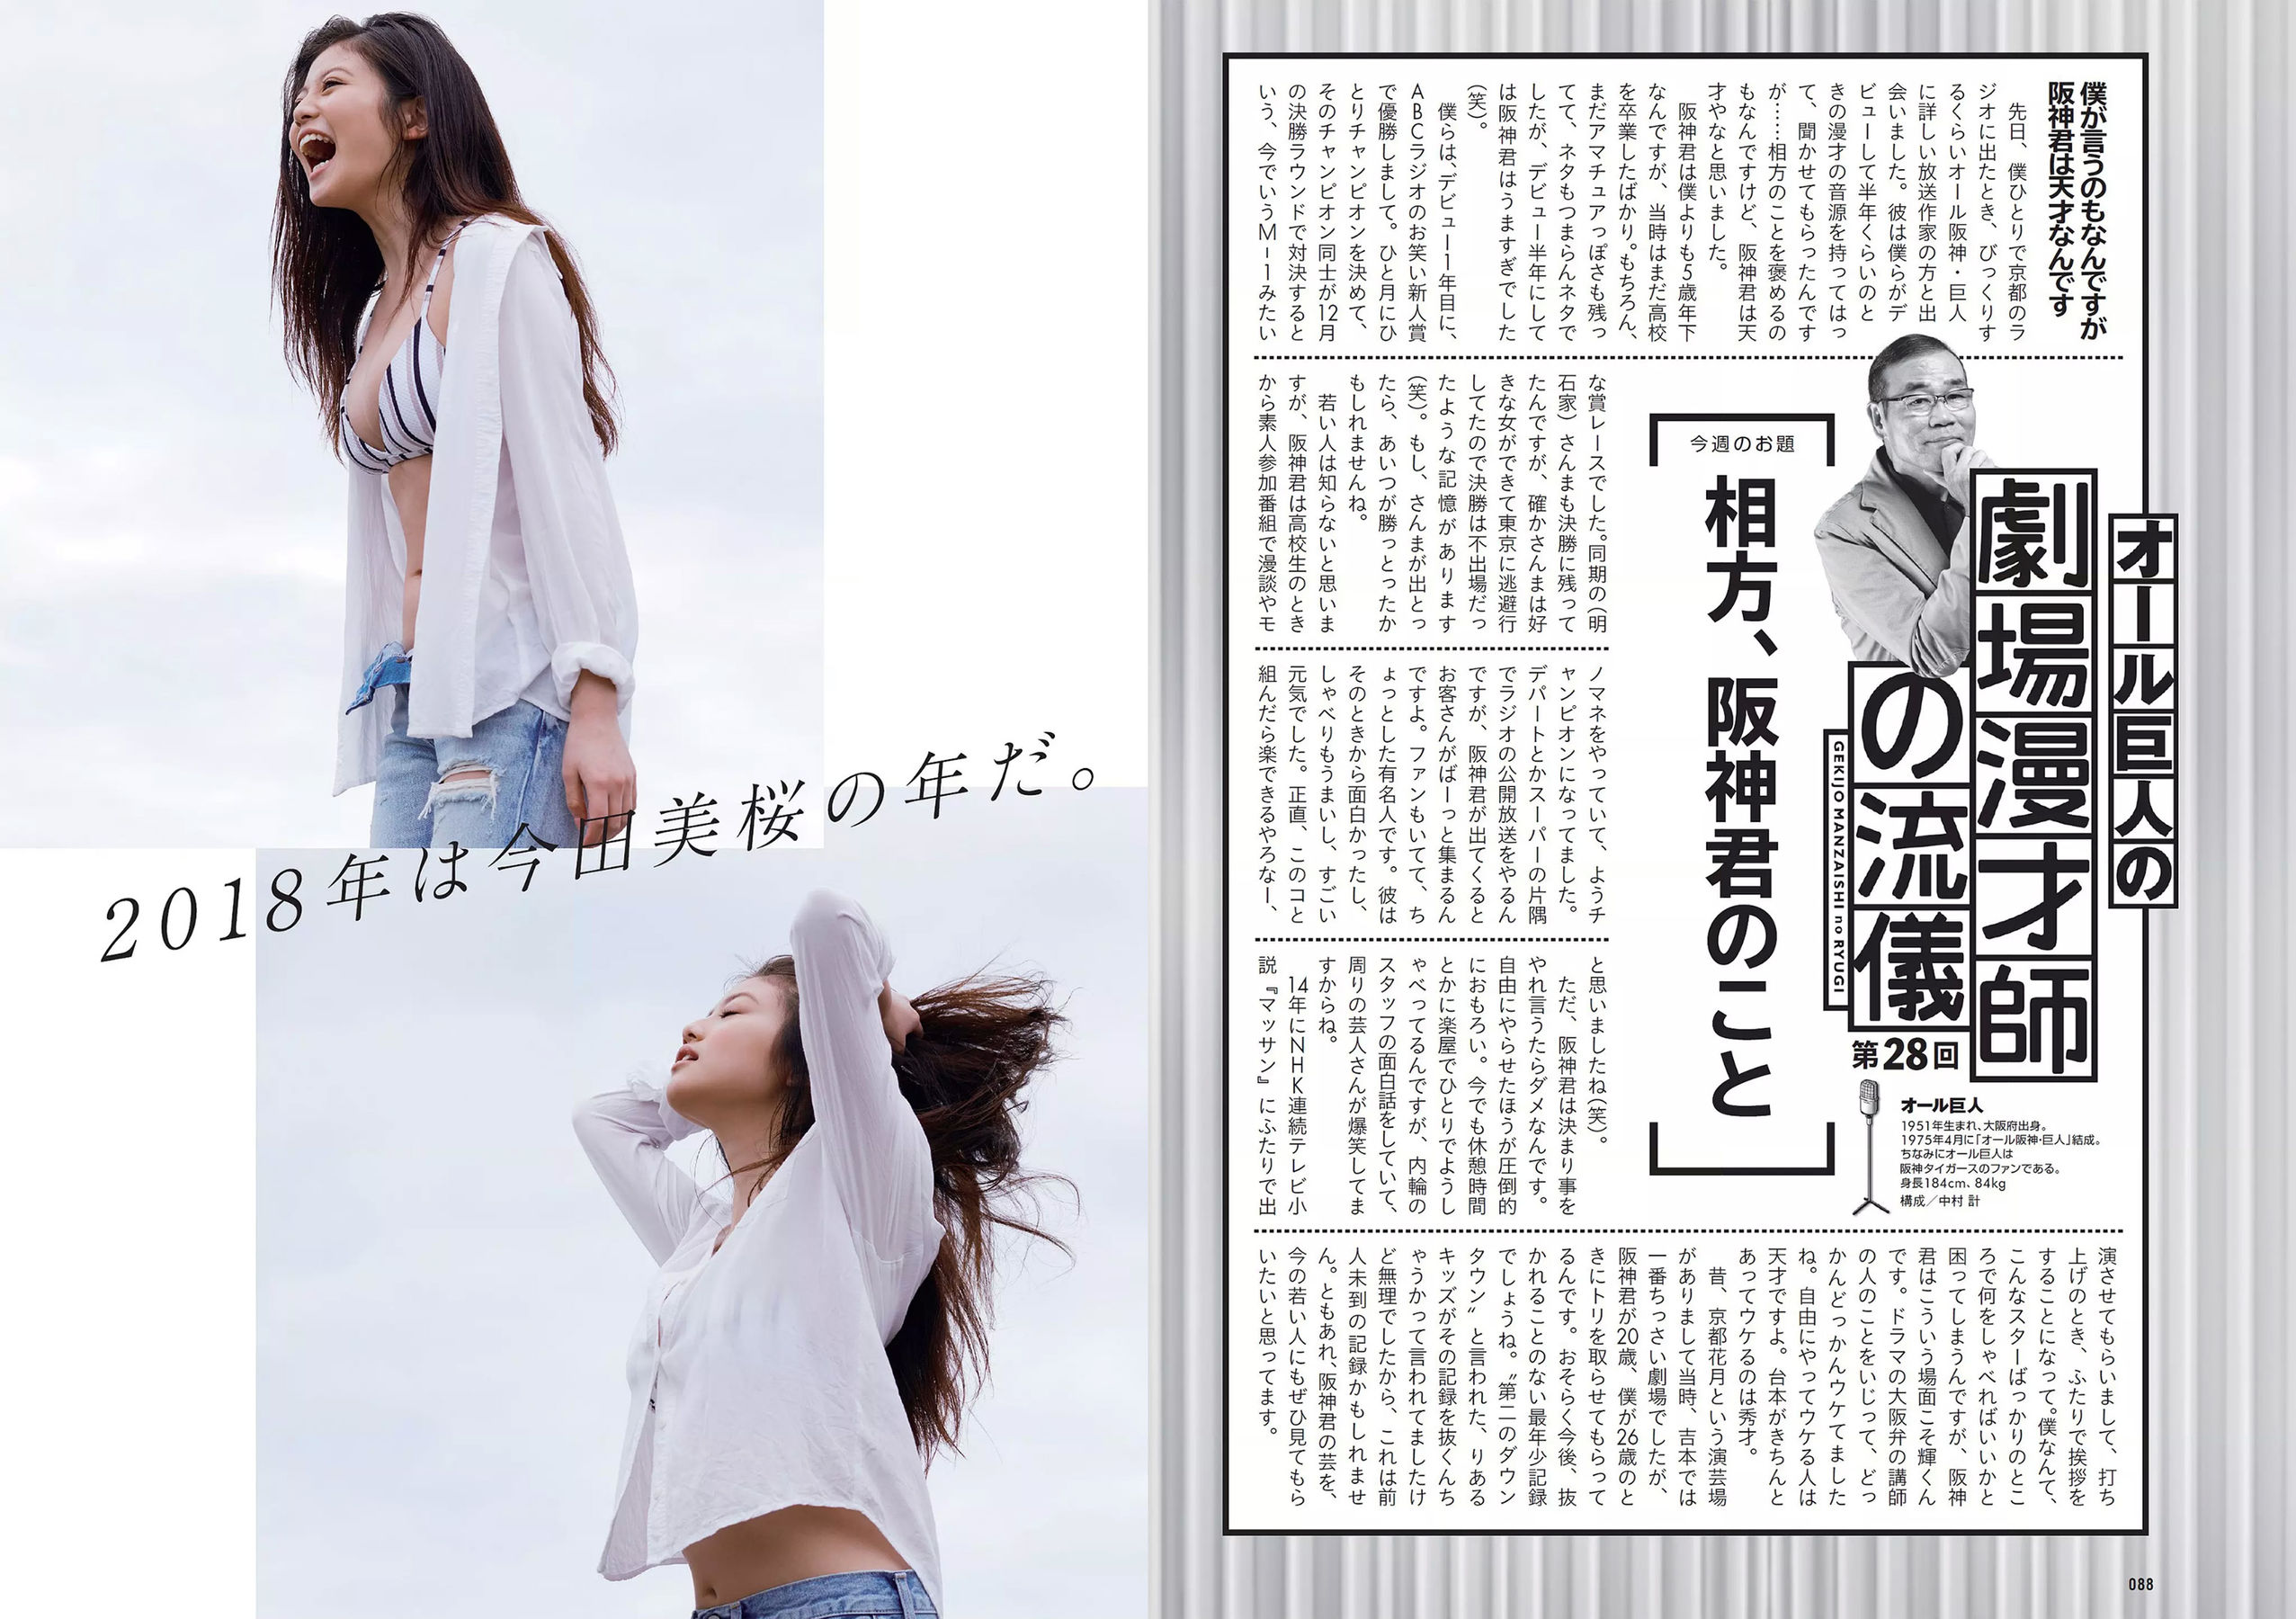 Asuka Hanamura Rina Asakawa Maika Yamamoto Mio Imada Nao Kosaka ☆ HOSHINO [Weekly Playboy] 2018 No.12 Photograph